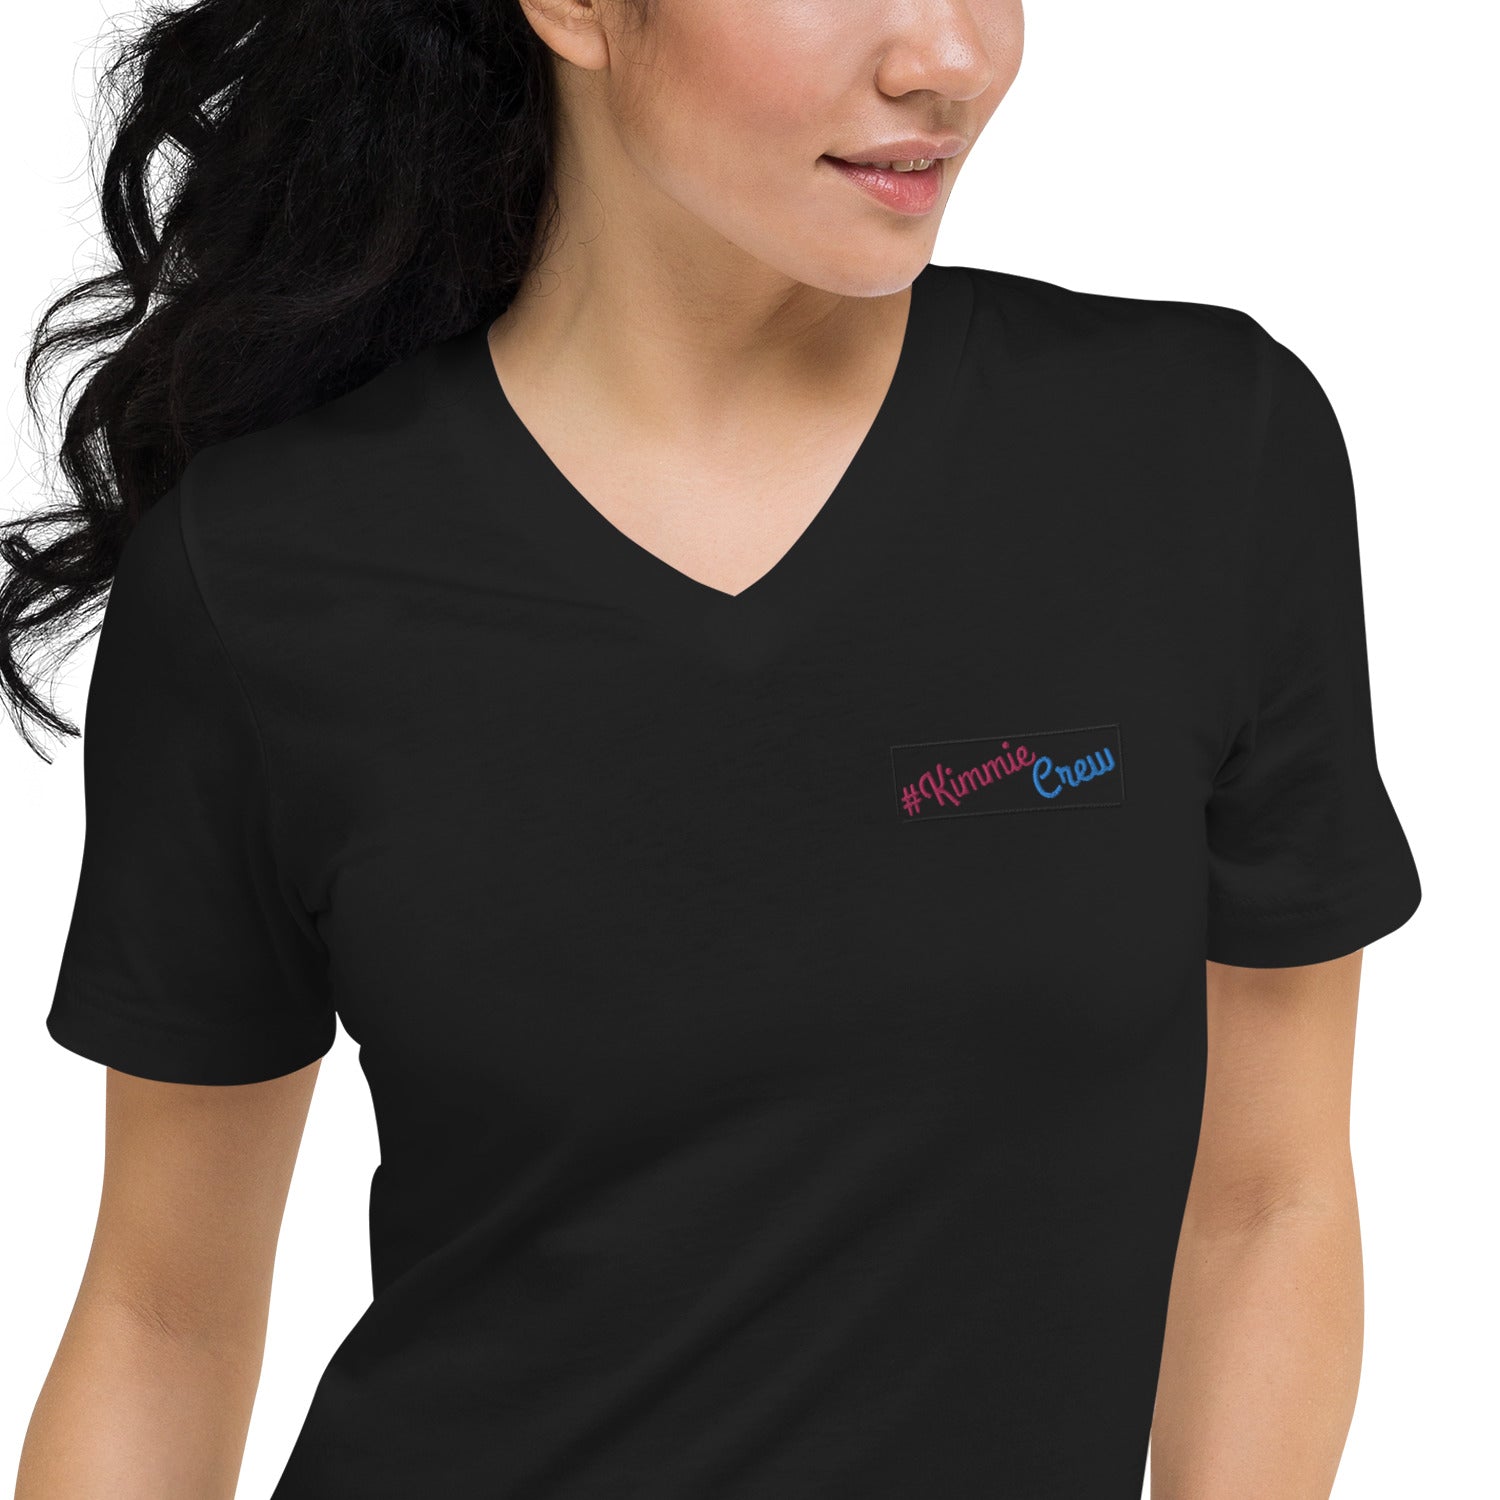 KIMMIEBBAGS. Unisex Short Sleeve V-Neck T-Shirt # KIMMIECREW